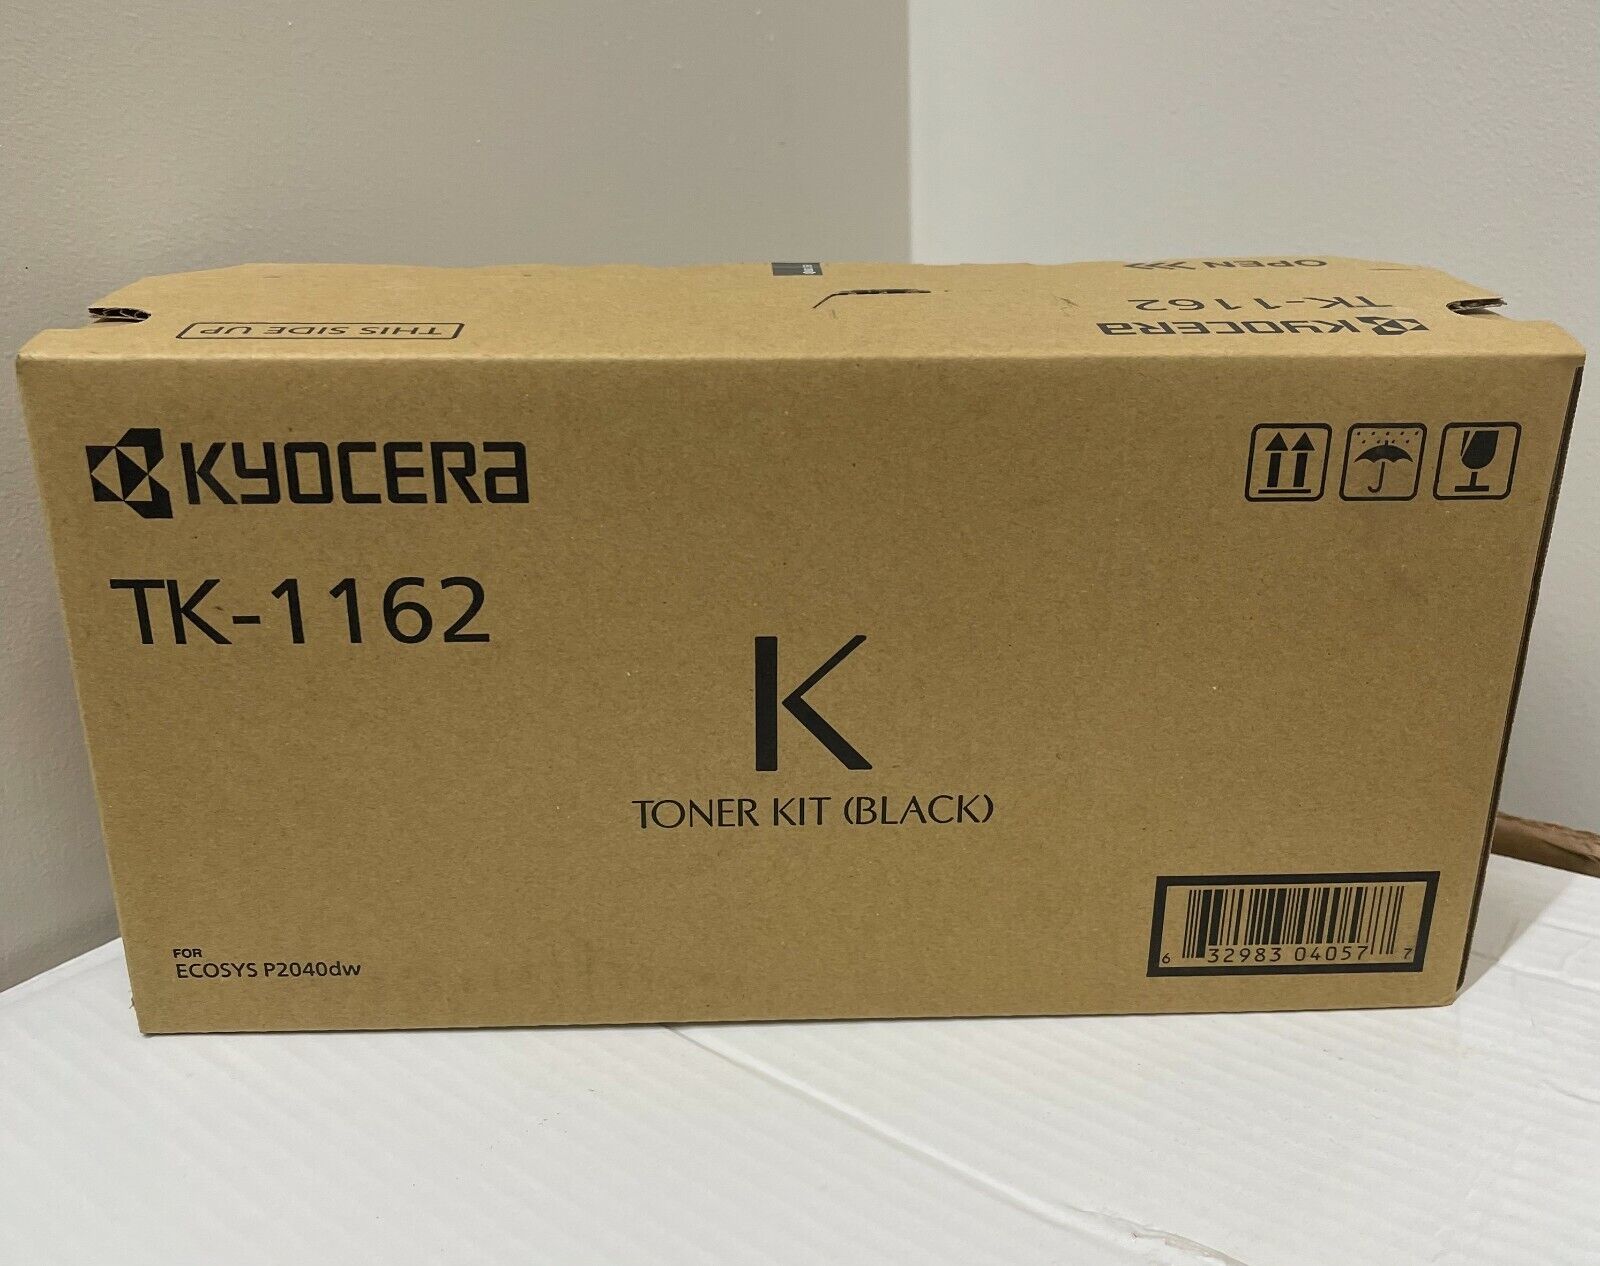 Kyocera Toner Kit Black TK-1162 for ECOSYS P2040dw New In Box 